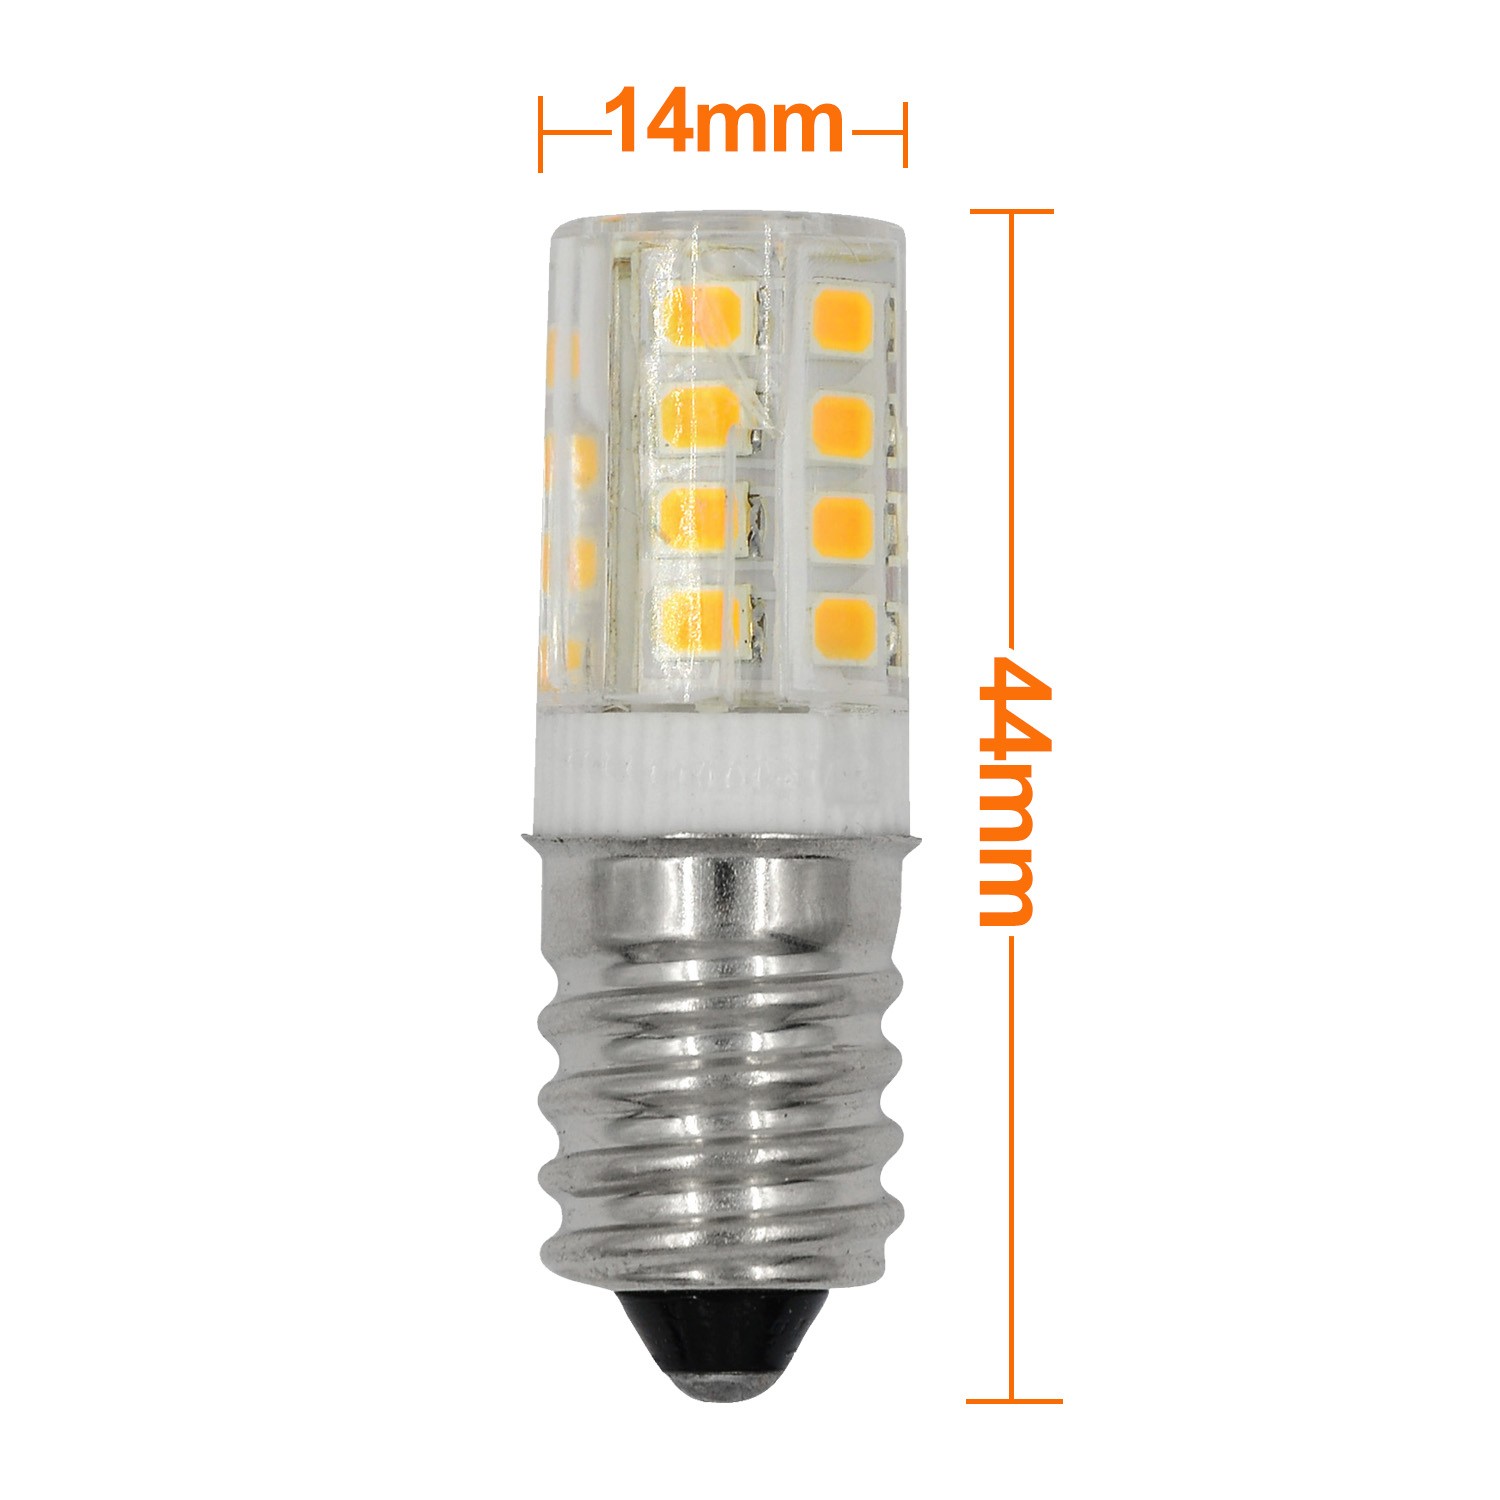 MengsLED – MENGS® E14 3W LED Light 26x 2835 SMD LED Bulb Lamp AC 220 ...